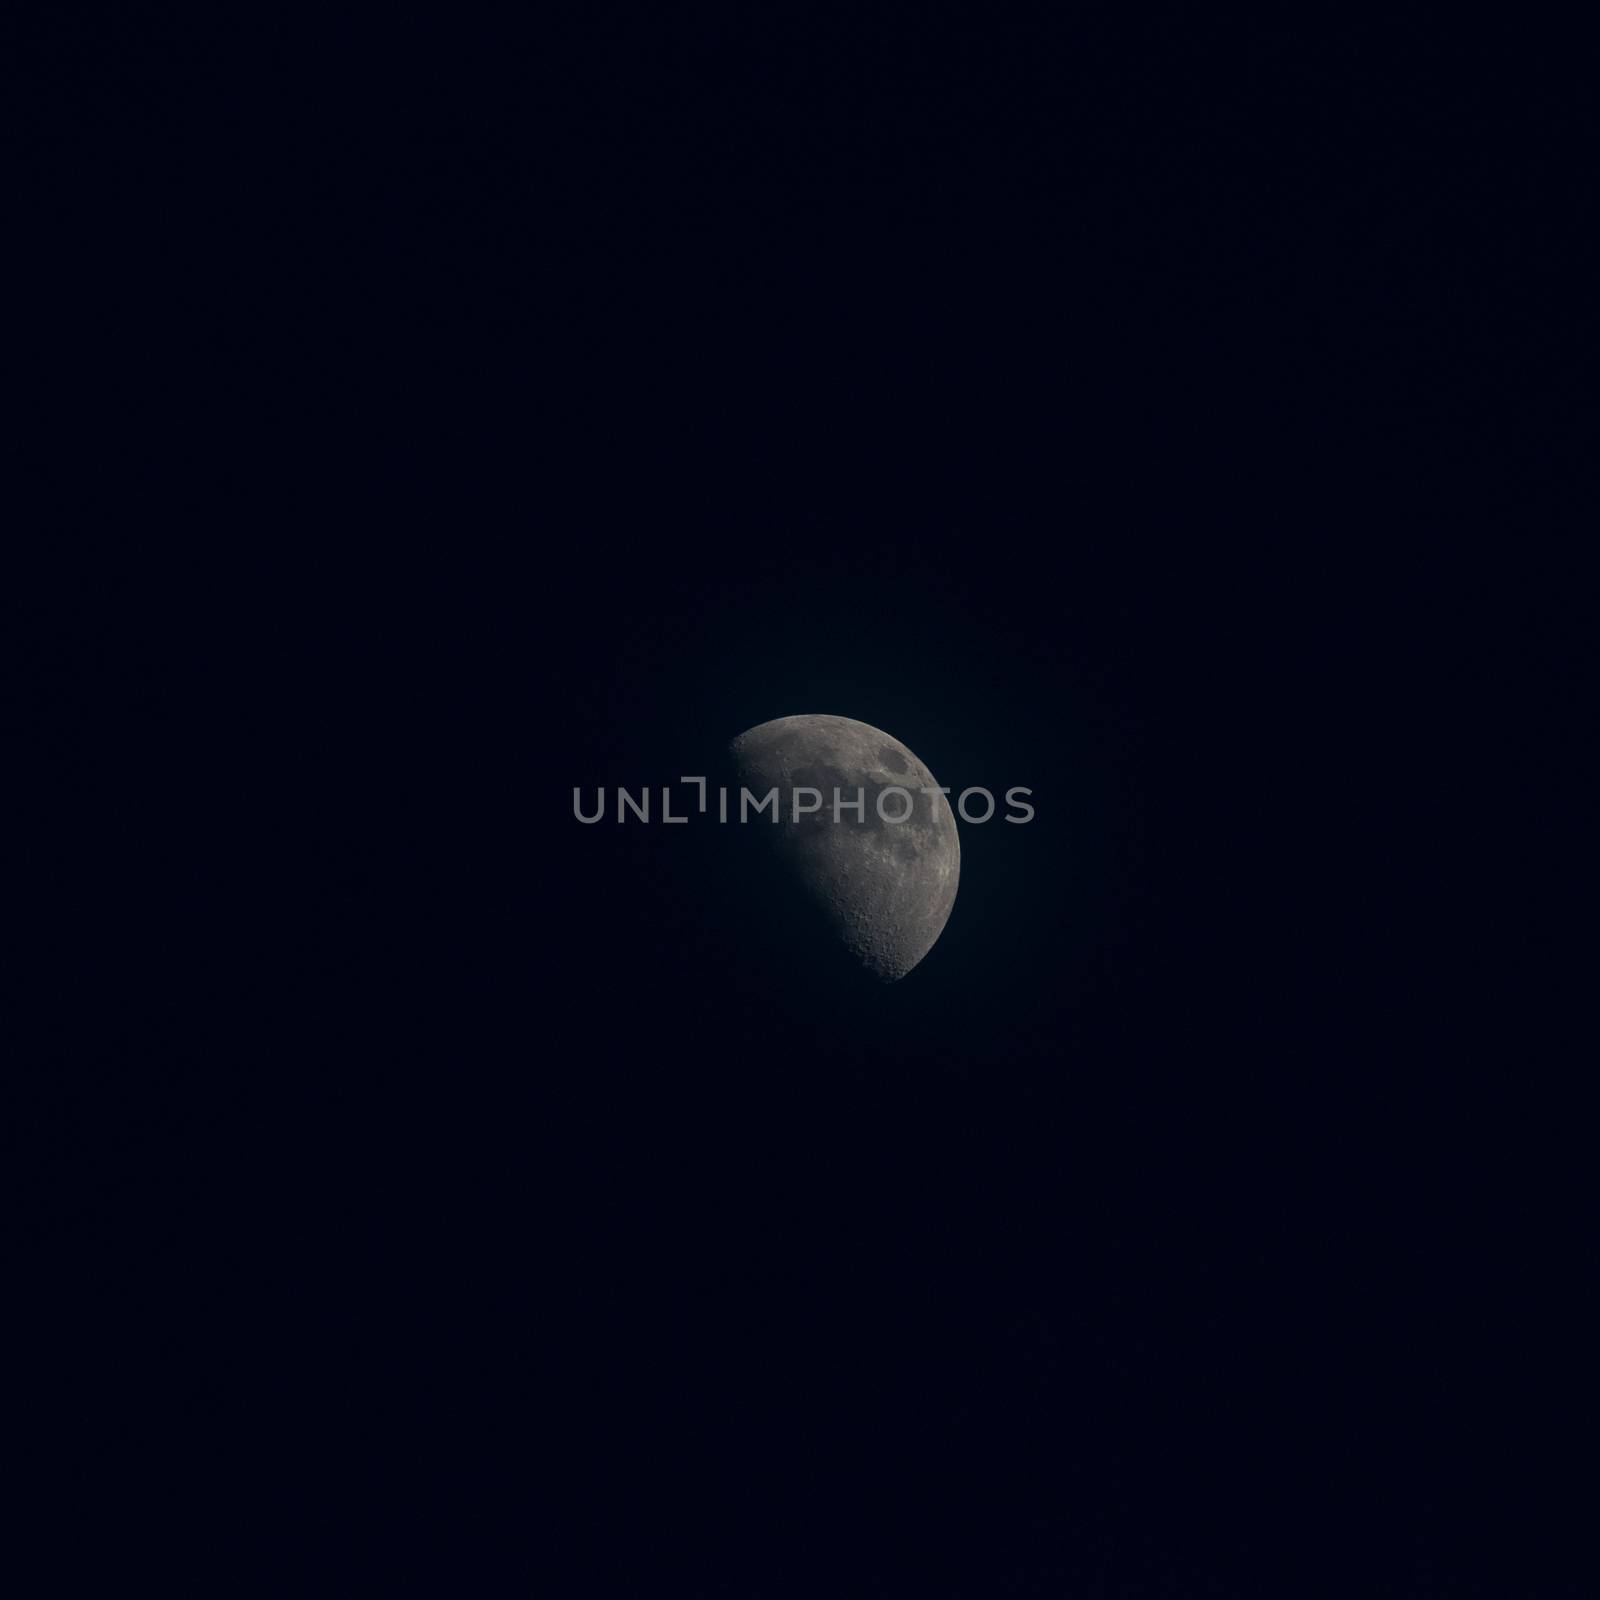 The moon on 19 Dec 2015 17:51 by PongMoji